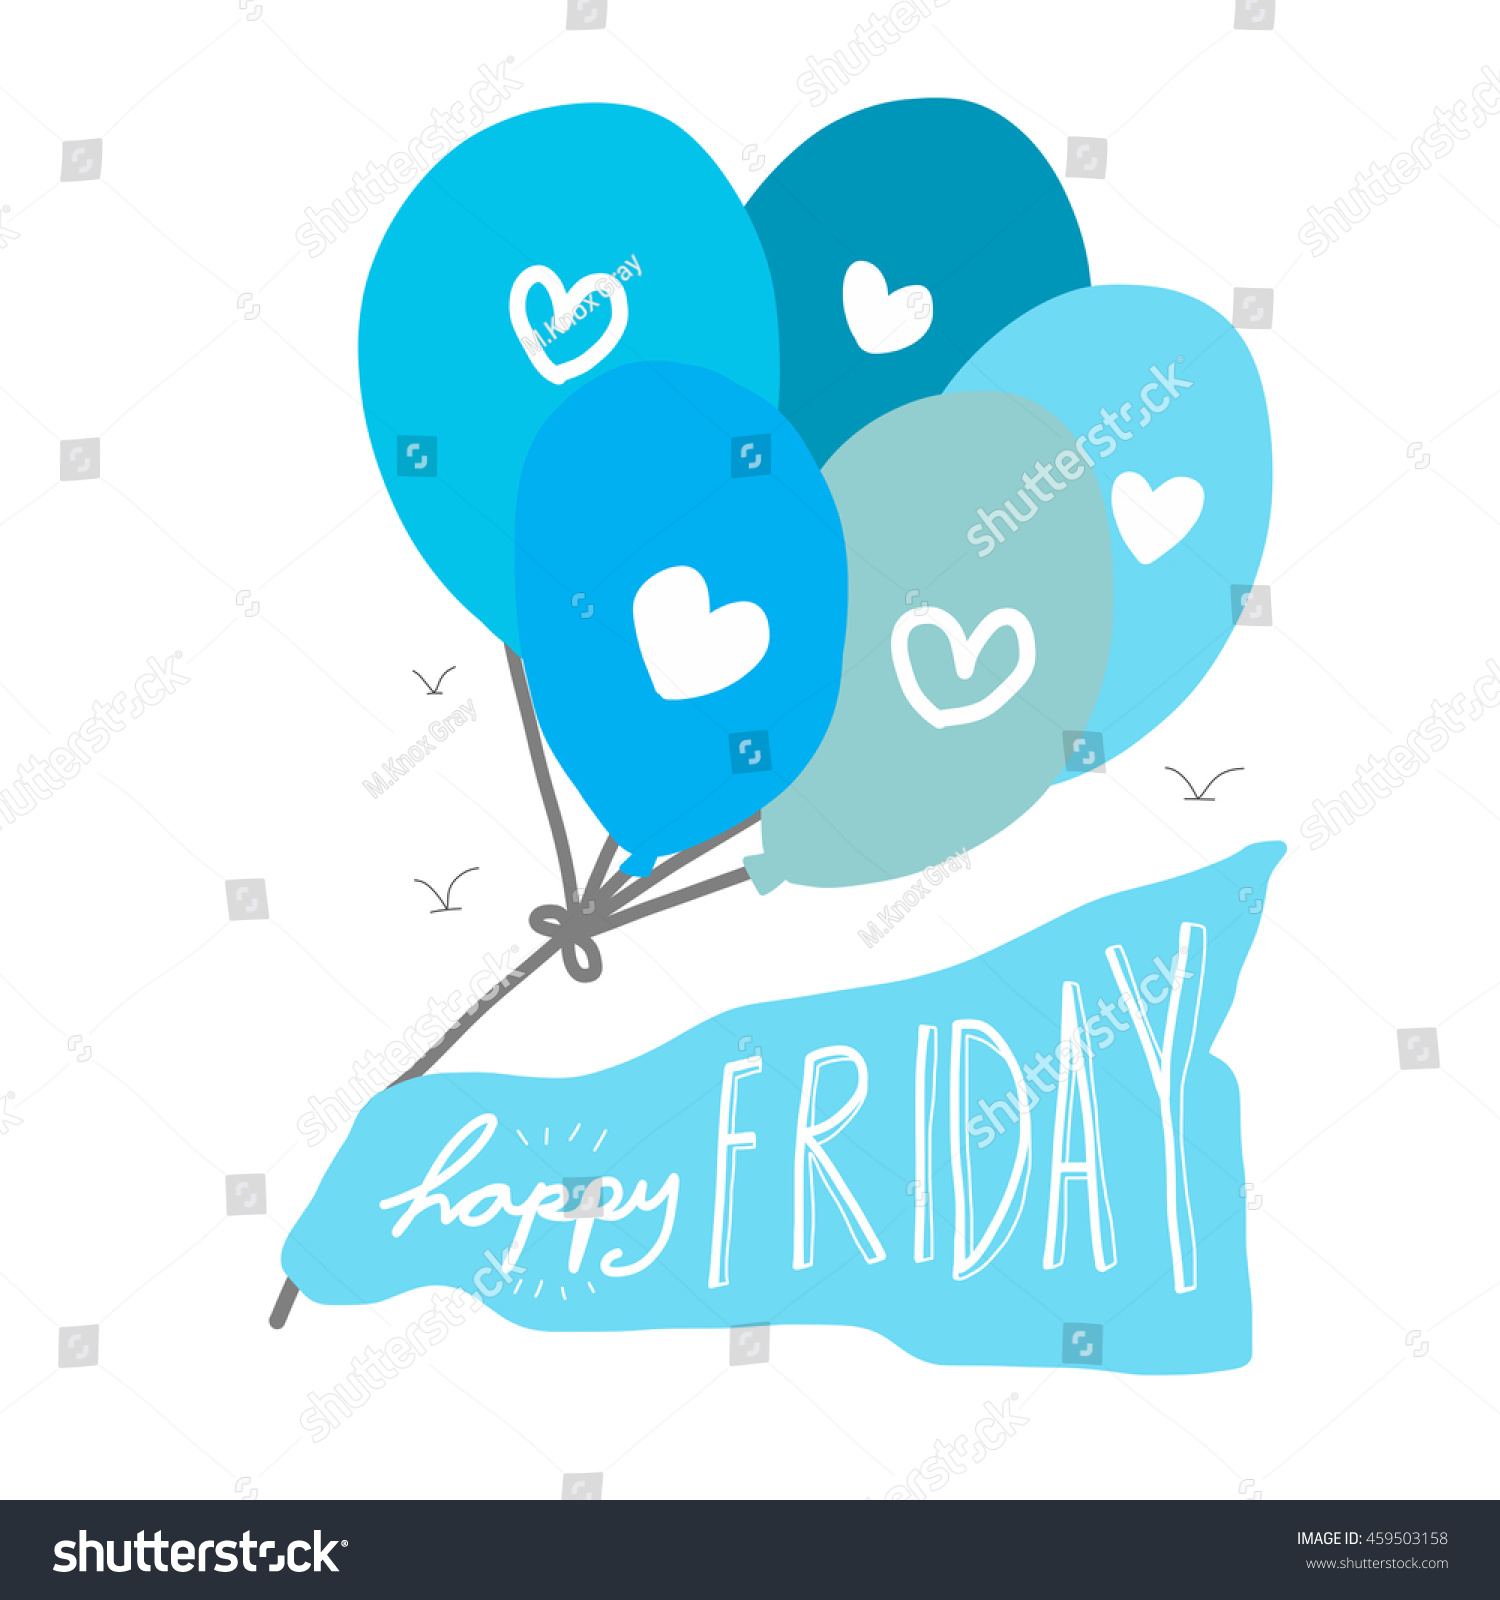 Happy Friday Balloon Illustration - 459503158 : Shutterstock